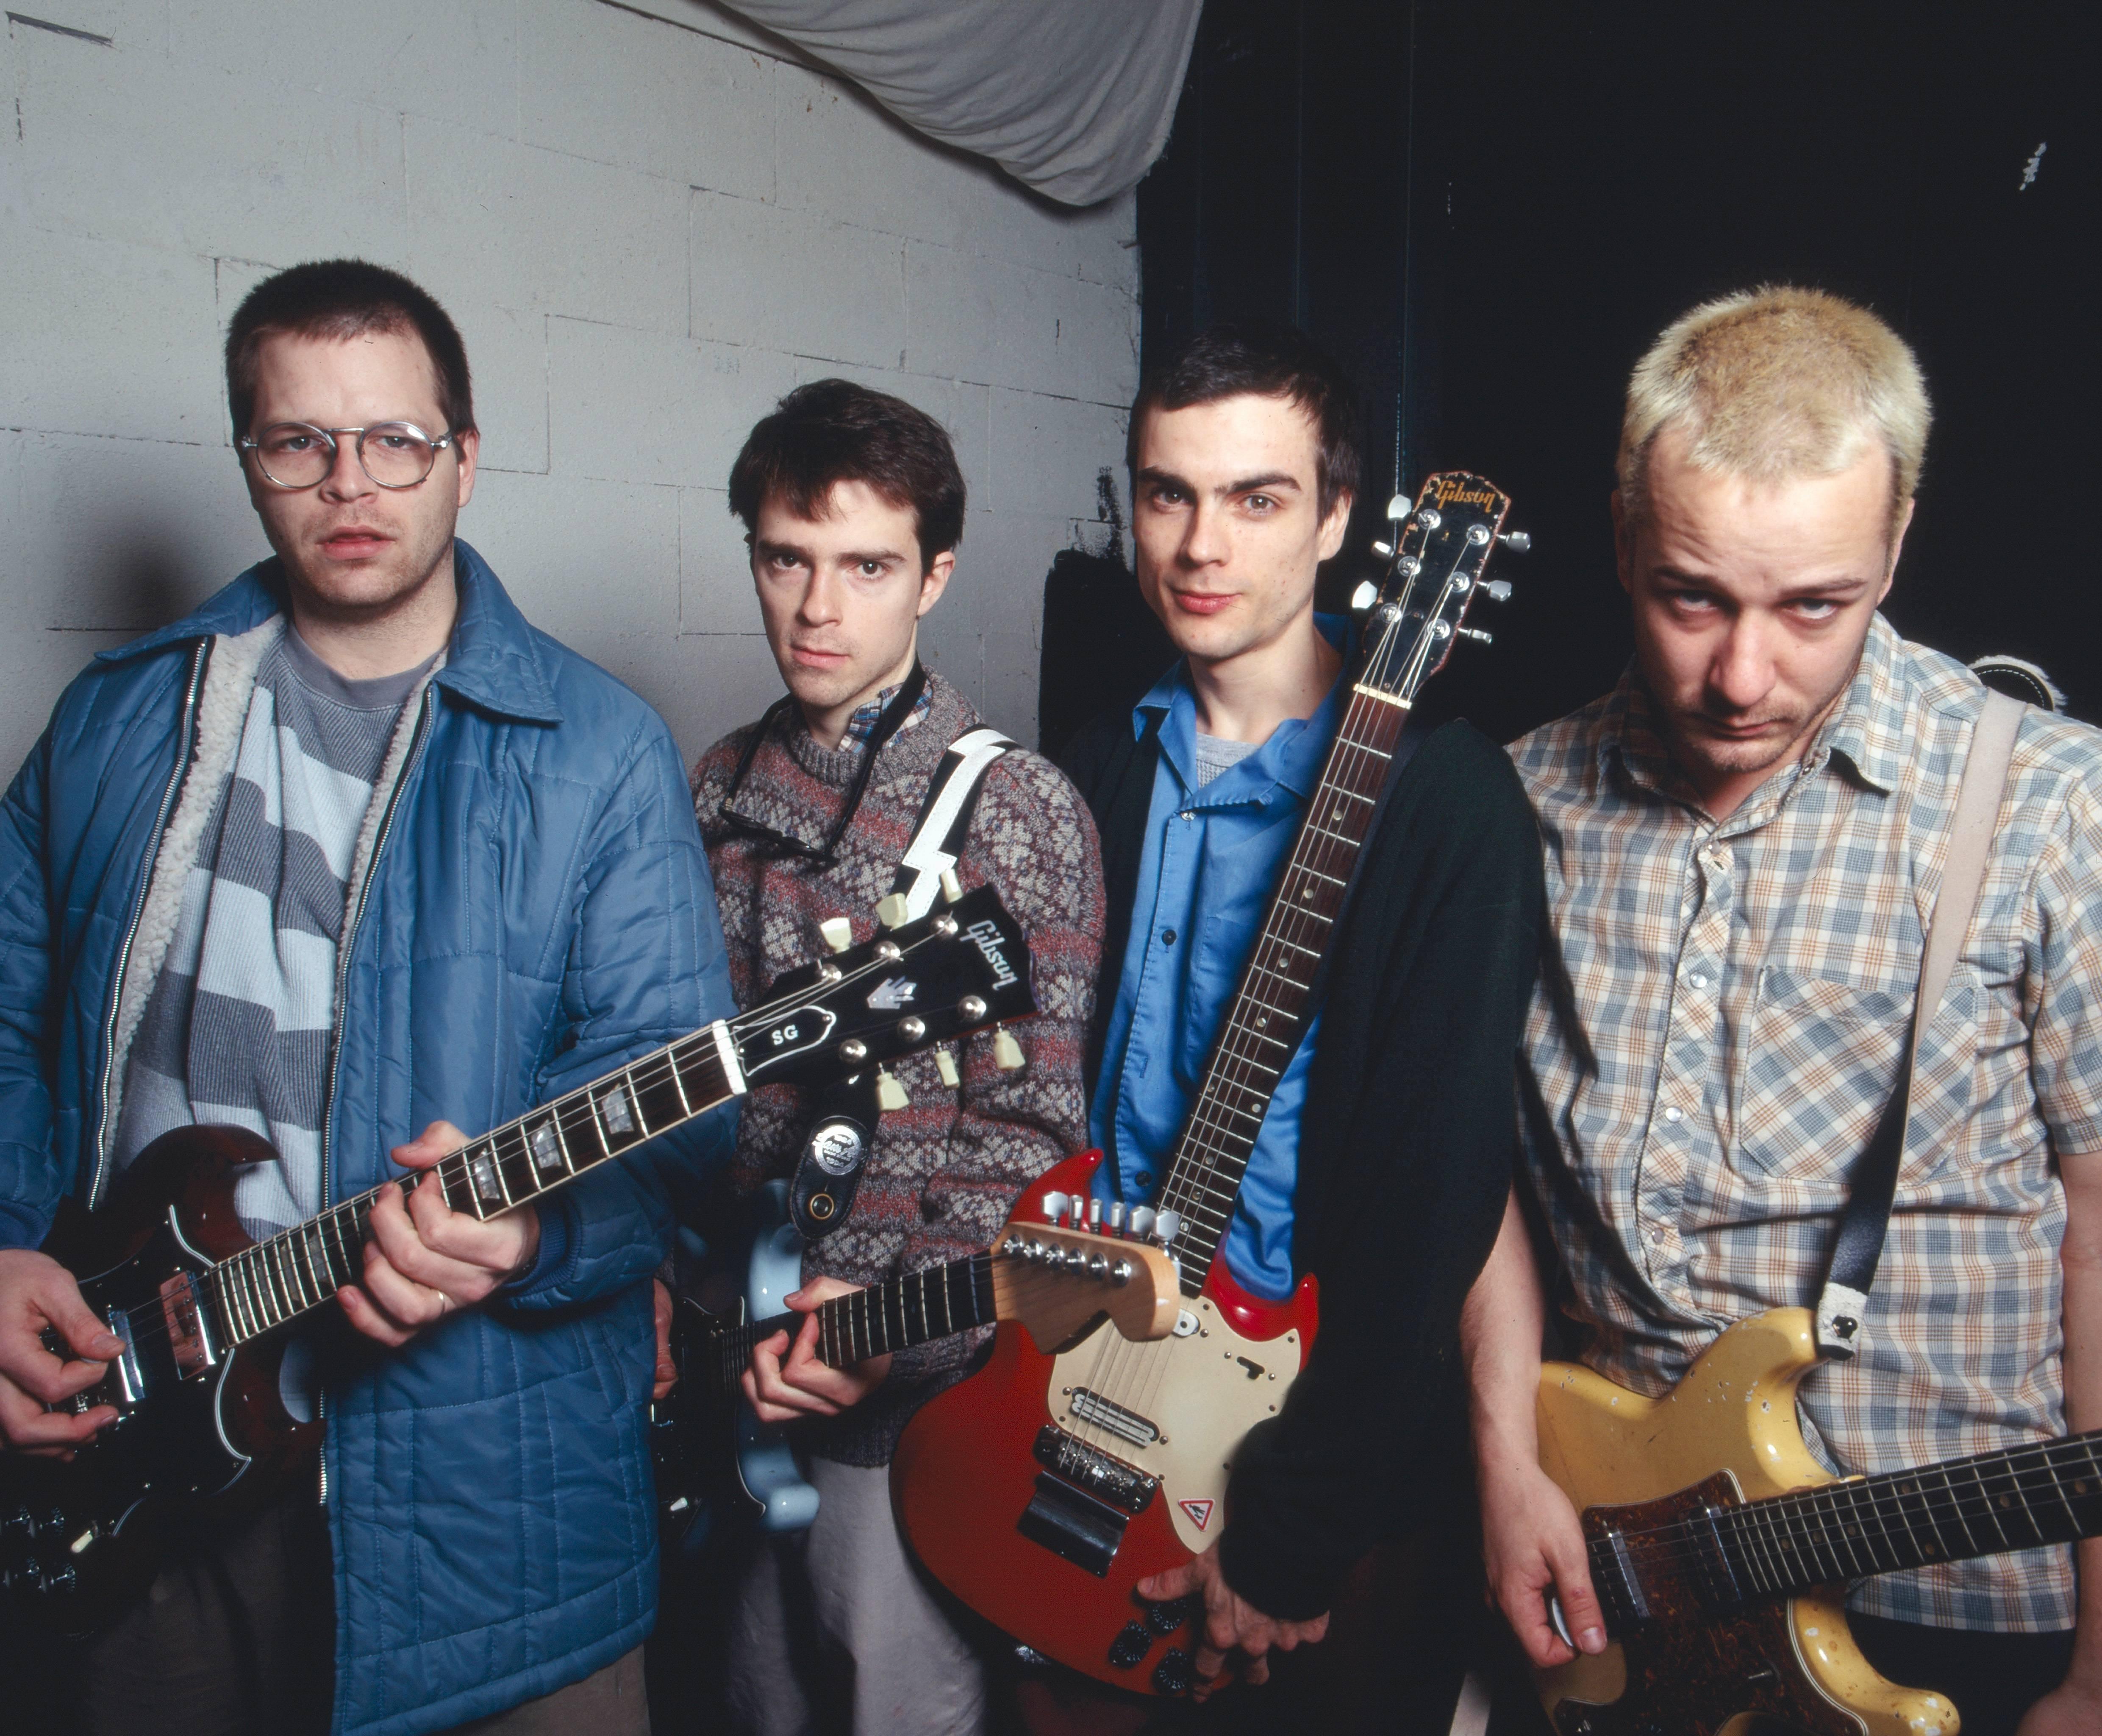 Patrick Wilson, Rivers Cuomo, Brian Bell and Matt Sharp of Weezer in 1995